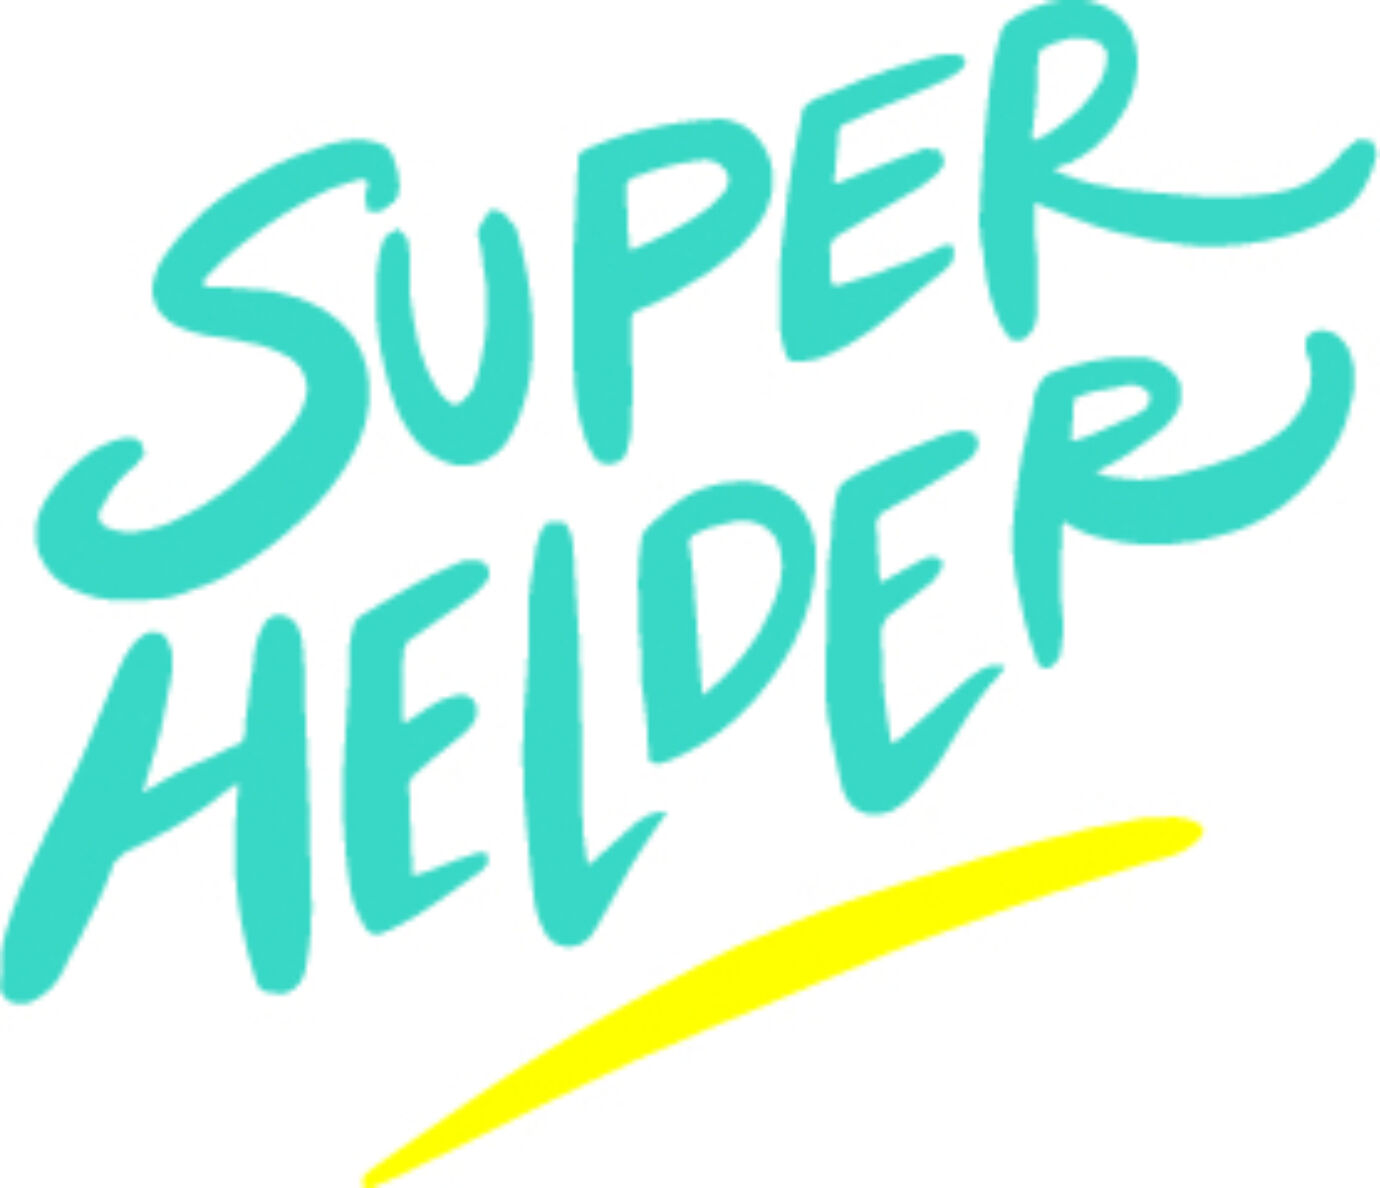 Logo superhelder